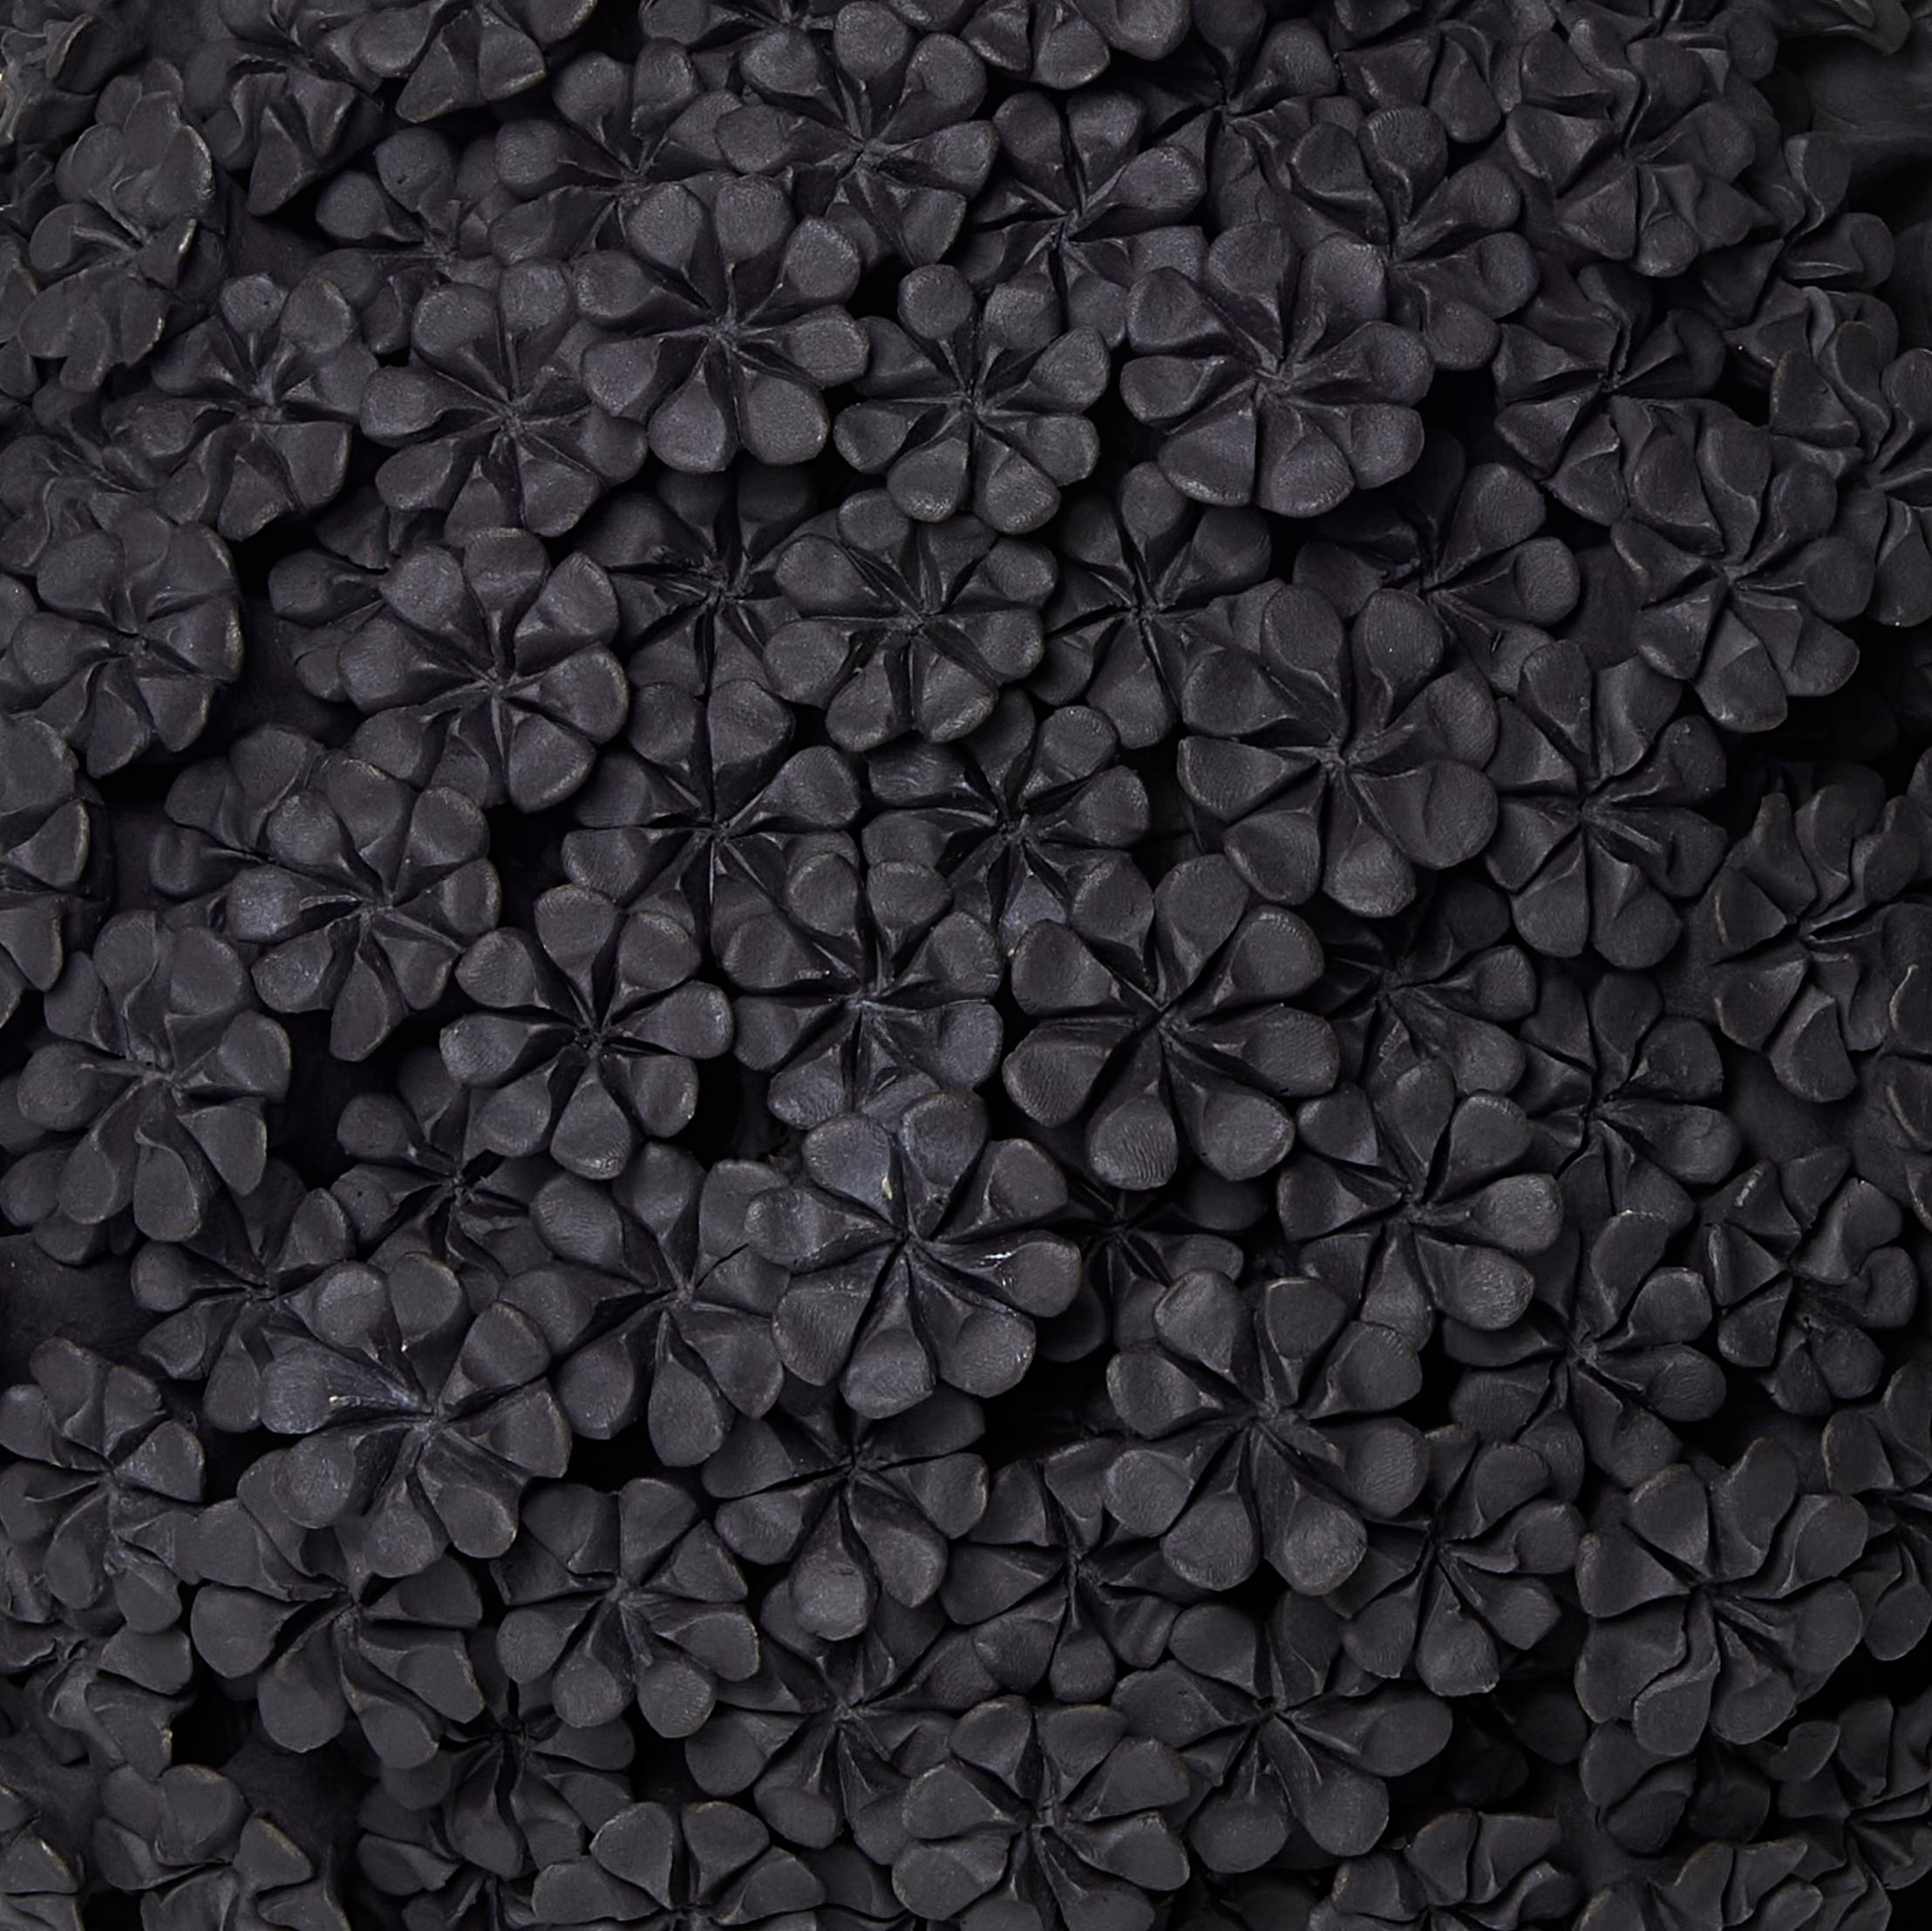 Organic Modern Daisy Teardrop, a Floral Black Stoneware Ceramic Sculpture by Vanessa Hogge